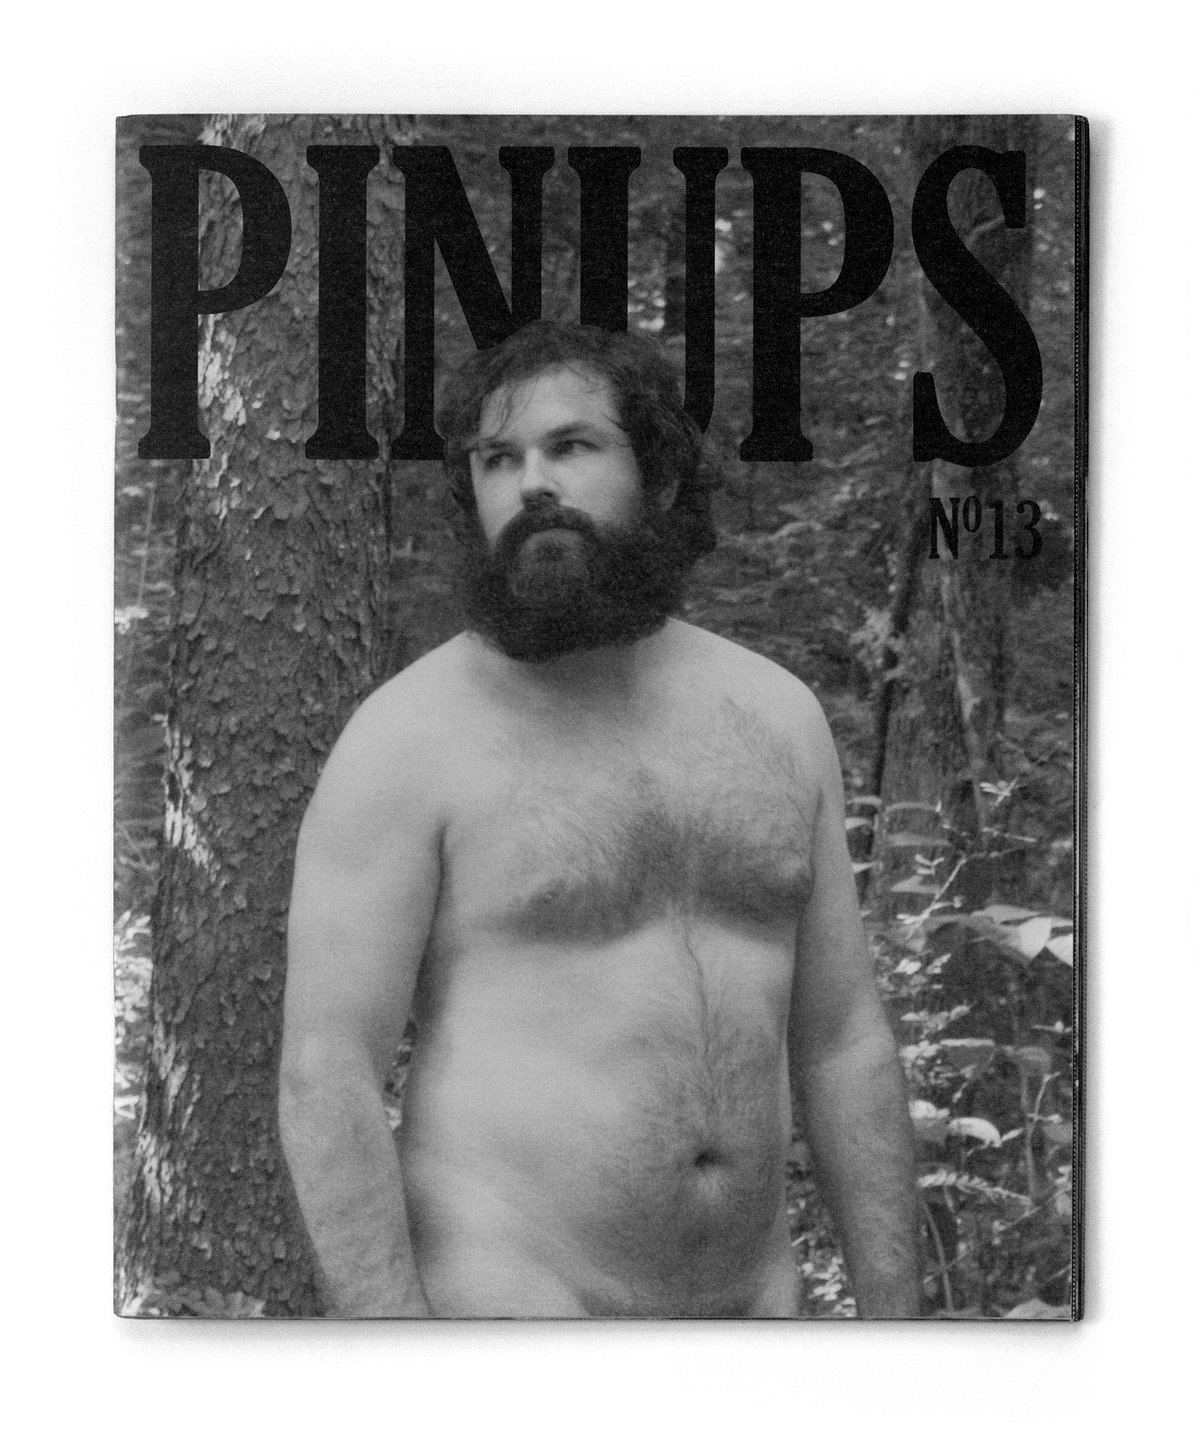 Image of Pinups Nº13